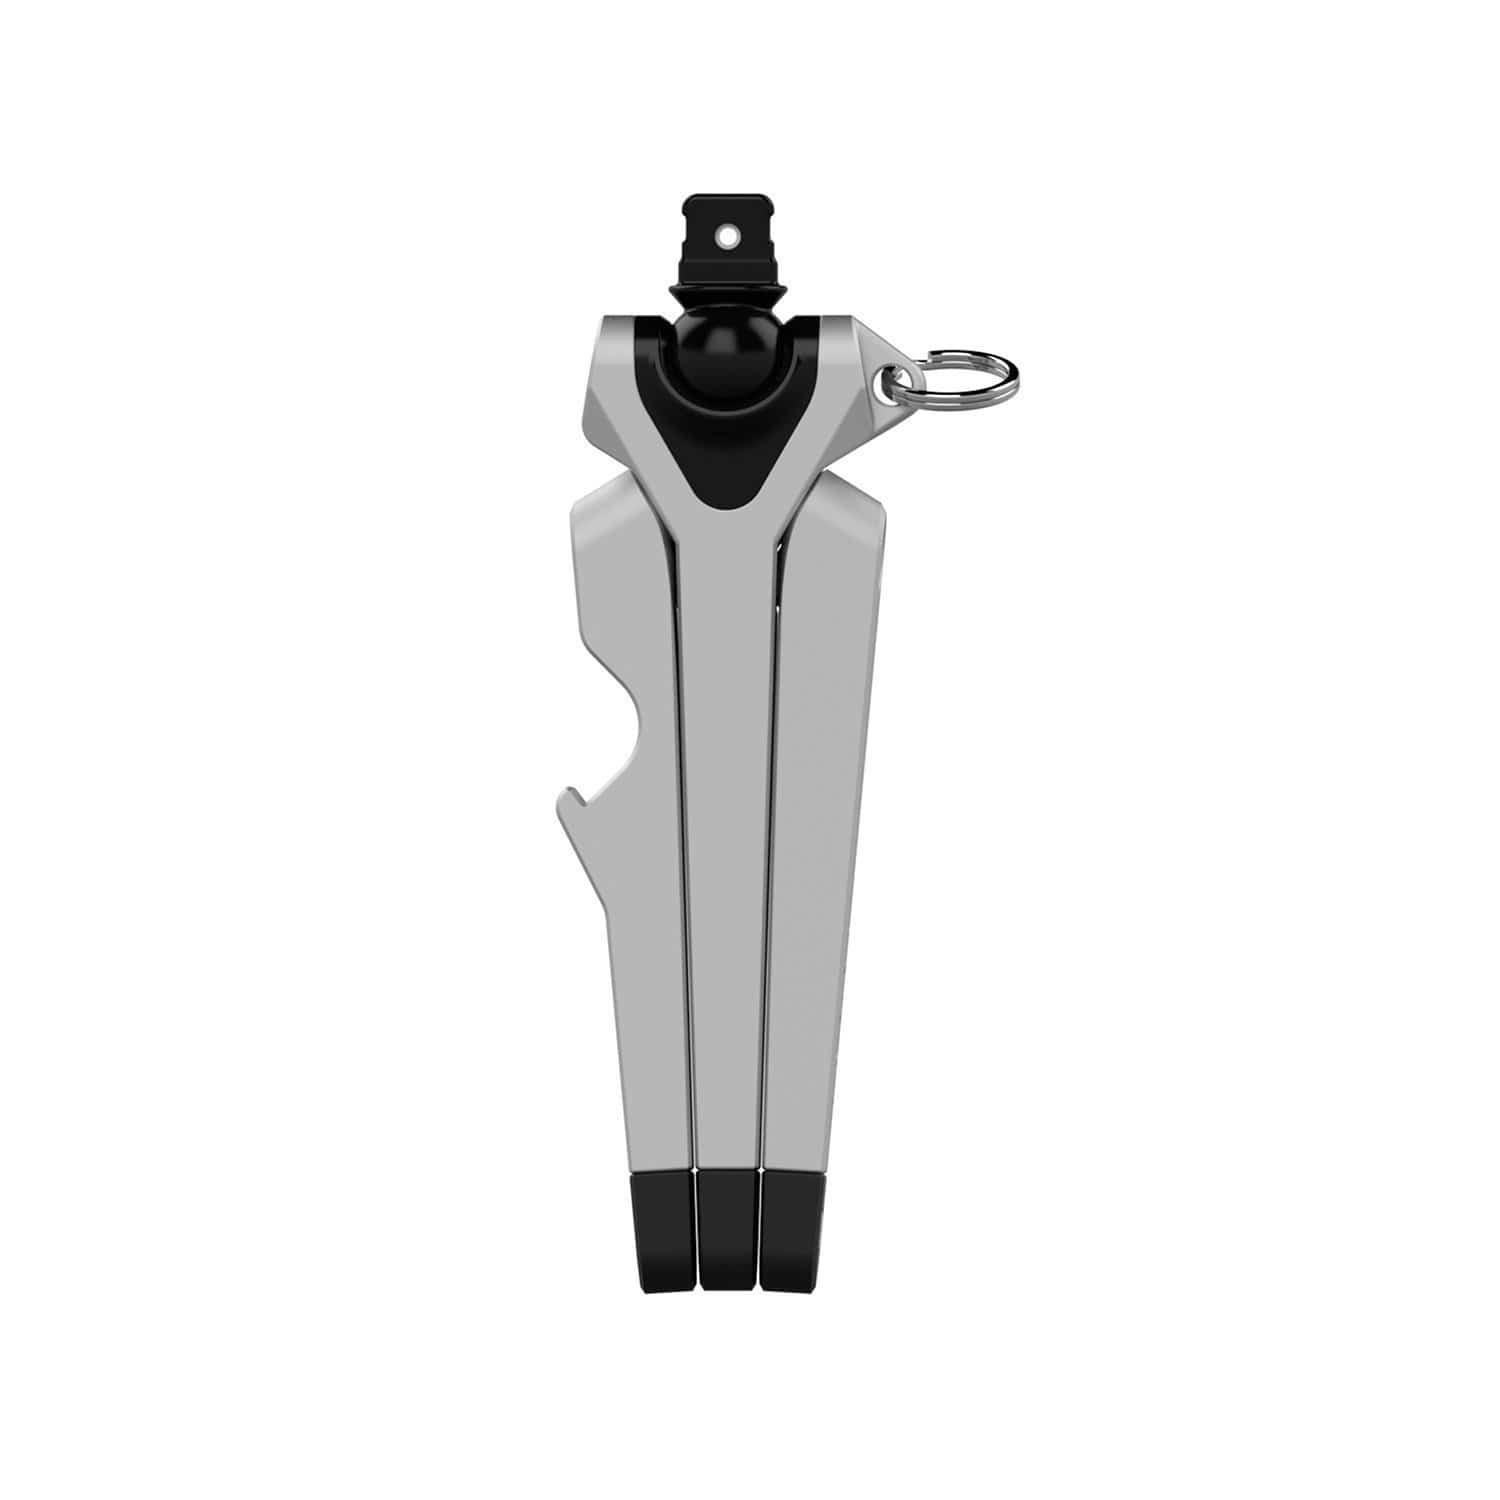 ستاند موبايل (حامل موبايل)  3 أرجل مع حلقة KENU Stance 2.0 - Compact Tripod USB Type C + Key Ring